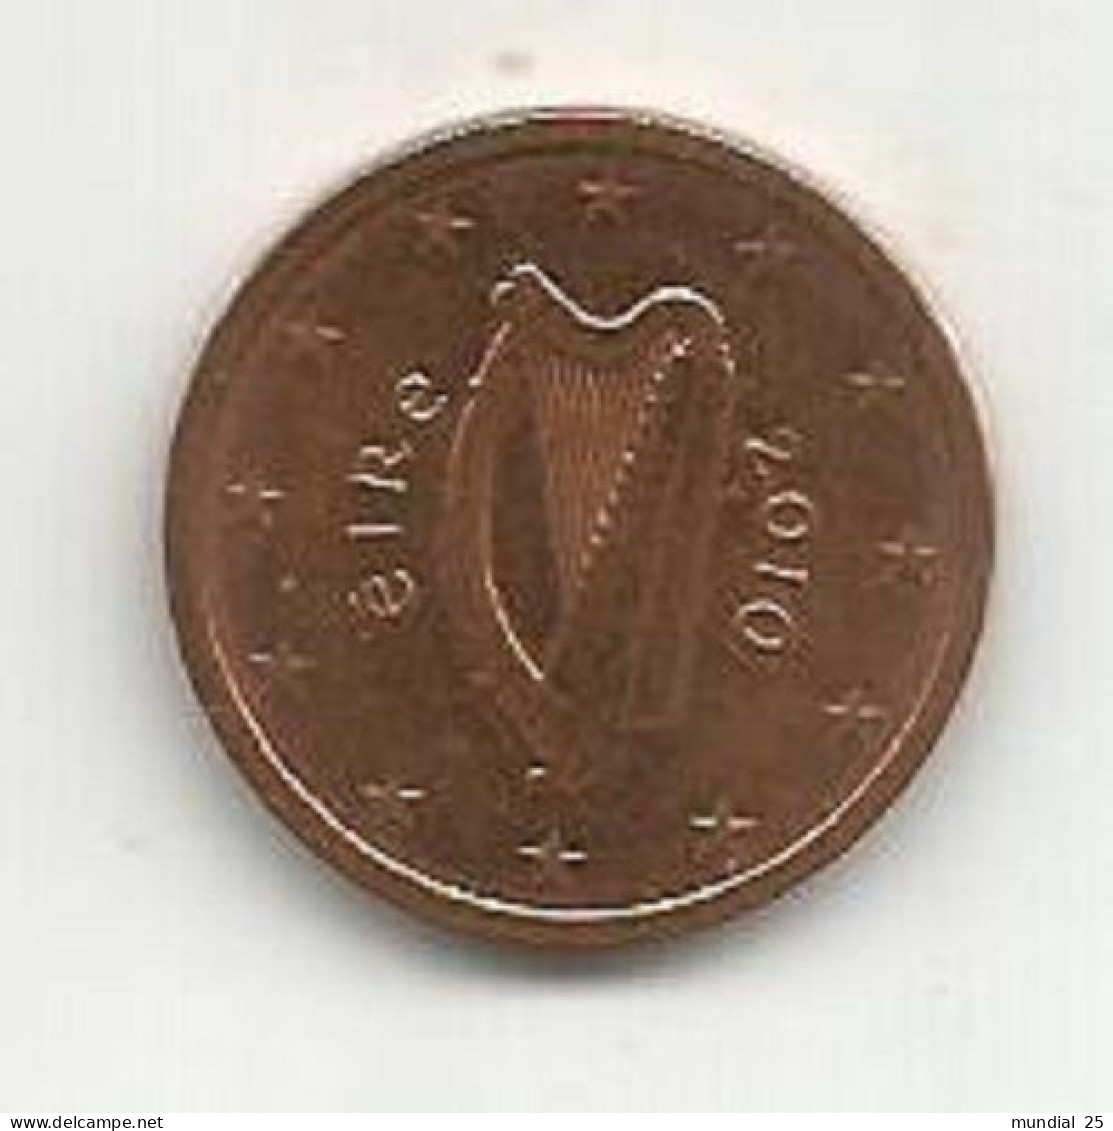 IRELAND 2 EURO CENT 2010 - Ireland